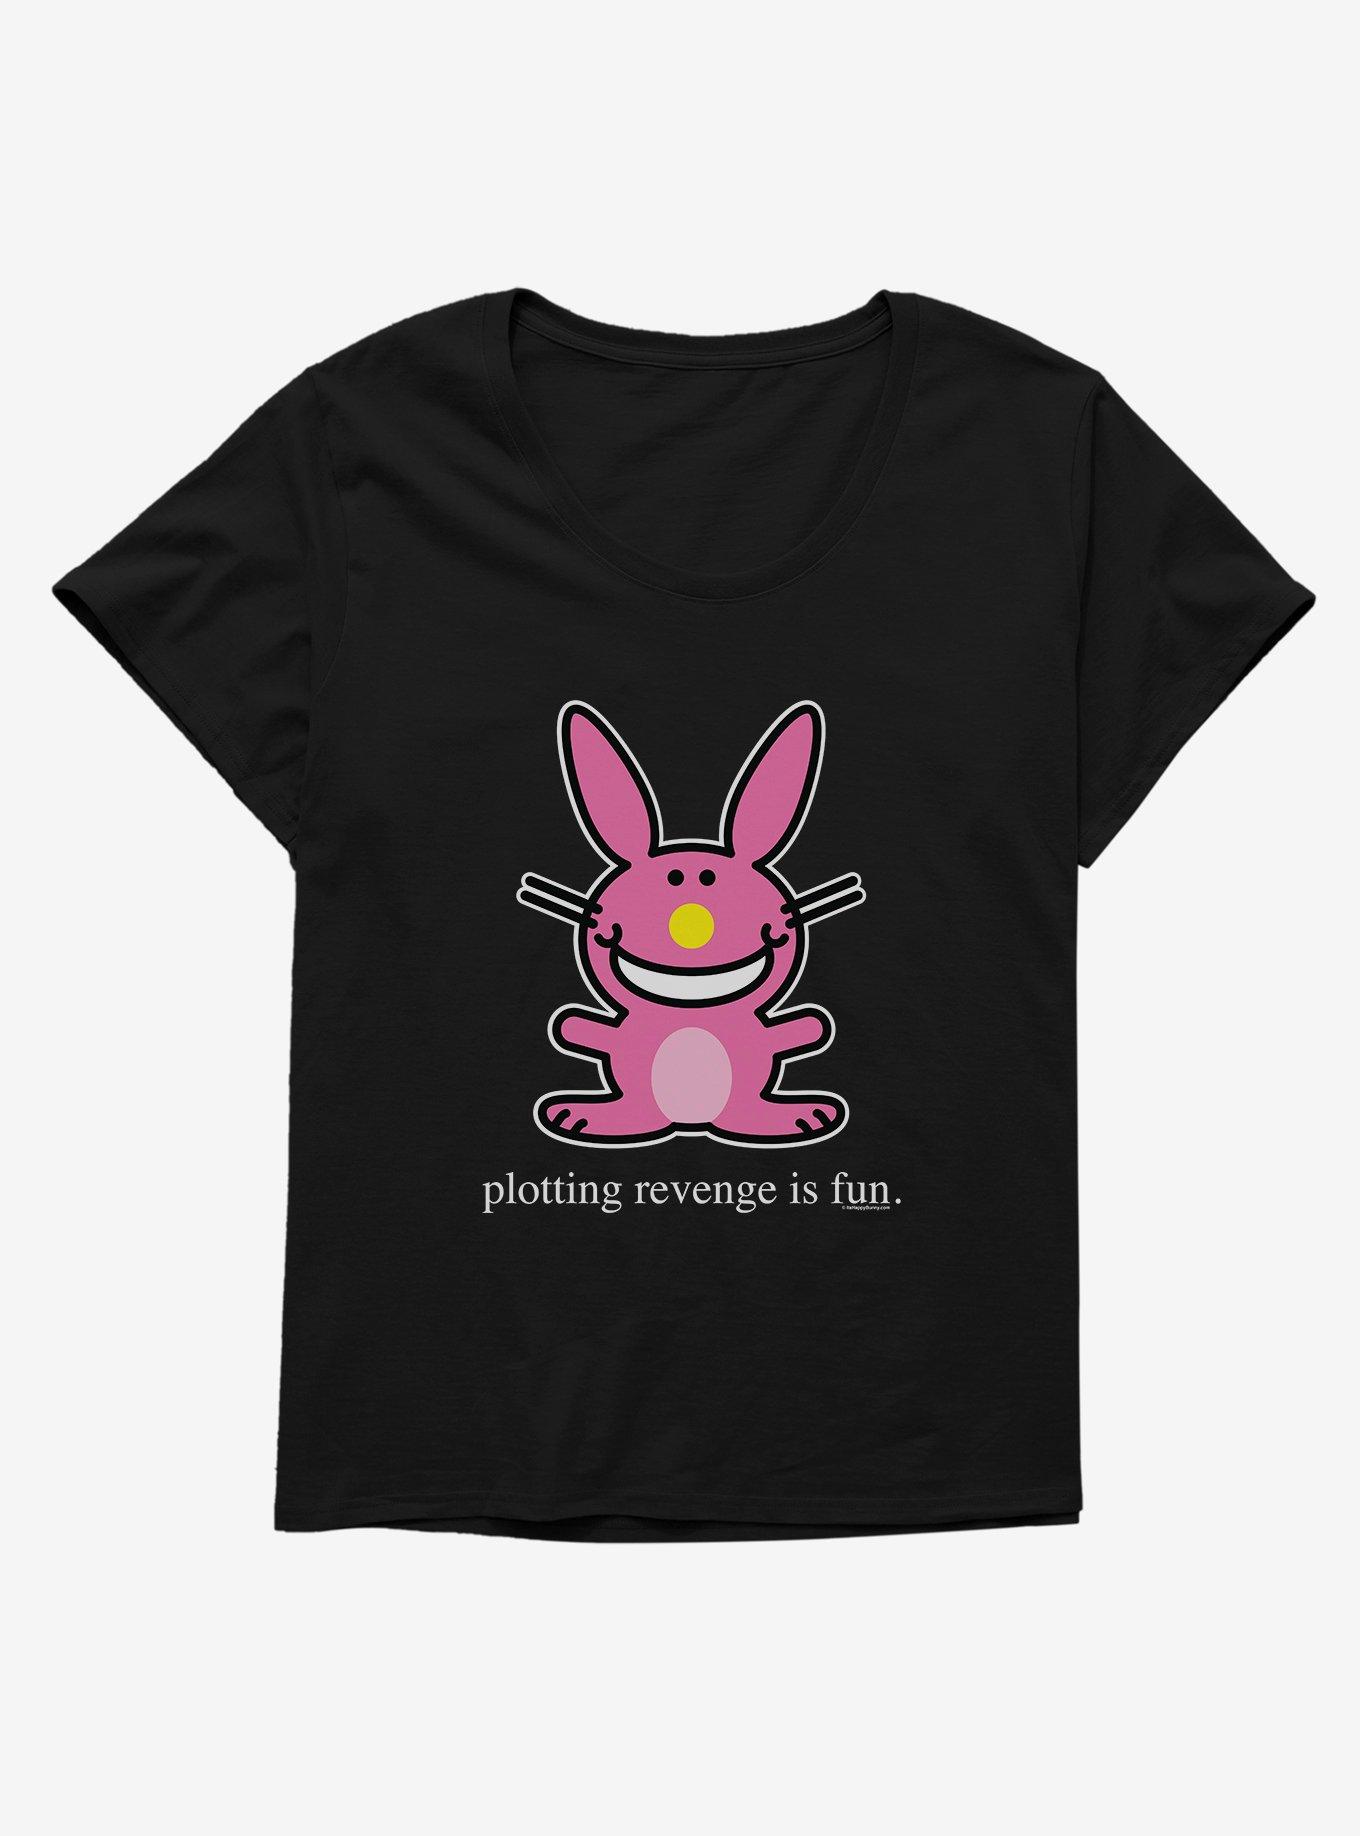 It's Happy Bunny Revenge Is Fun Girls T-Shirt Plus